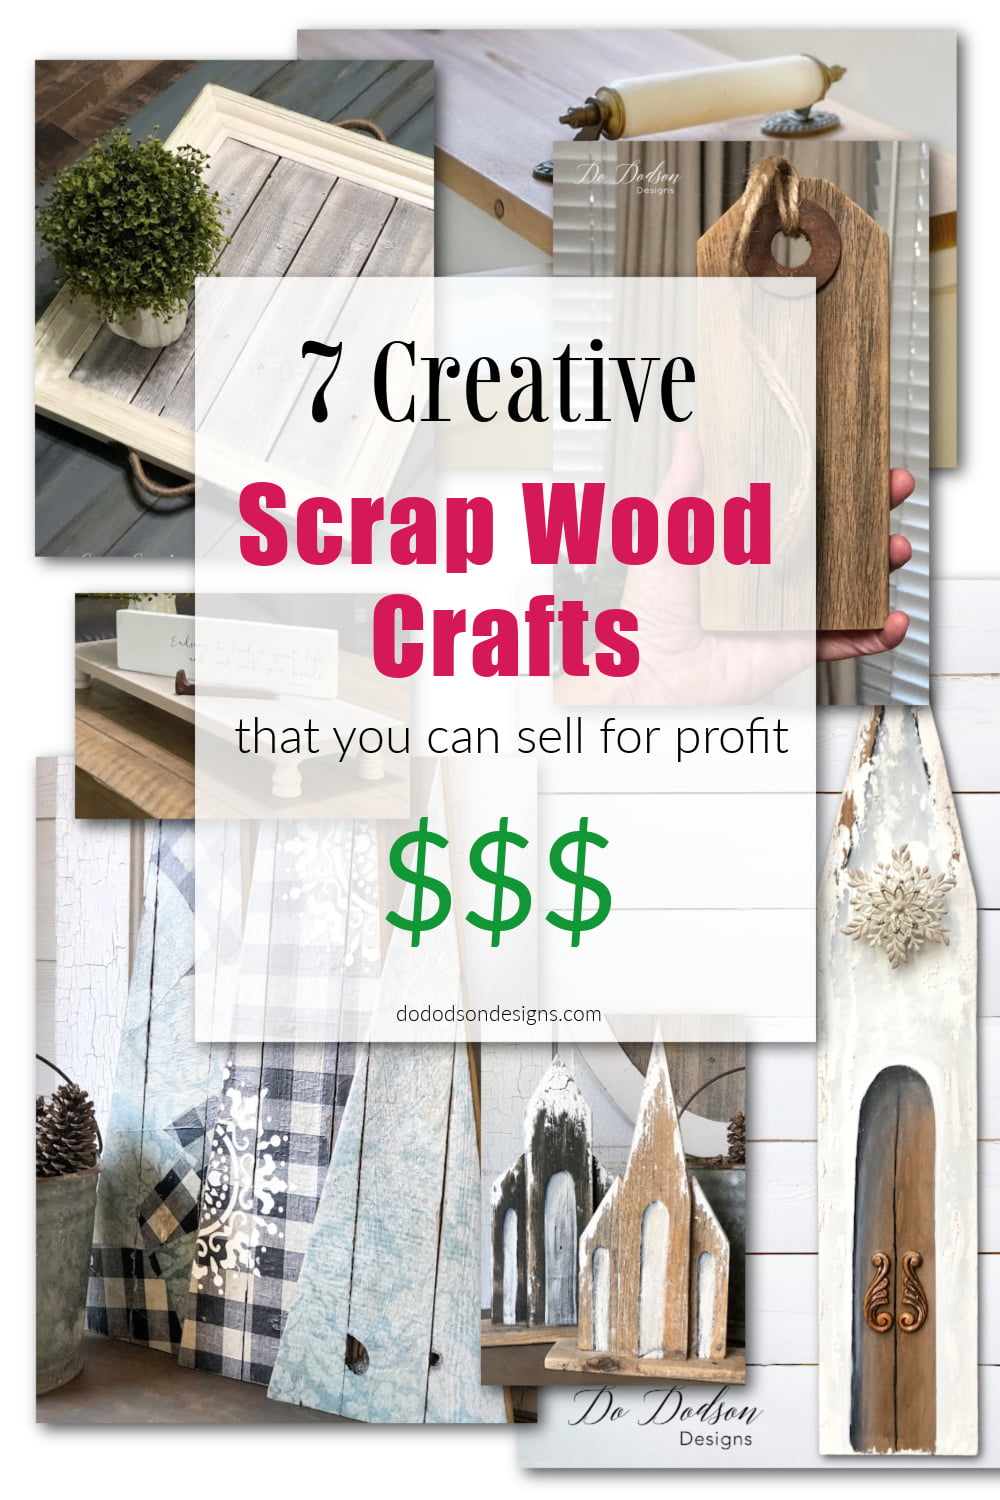 Free wood craft supplies